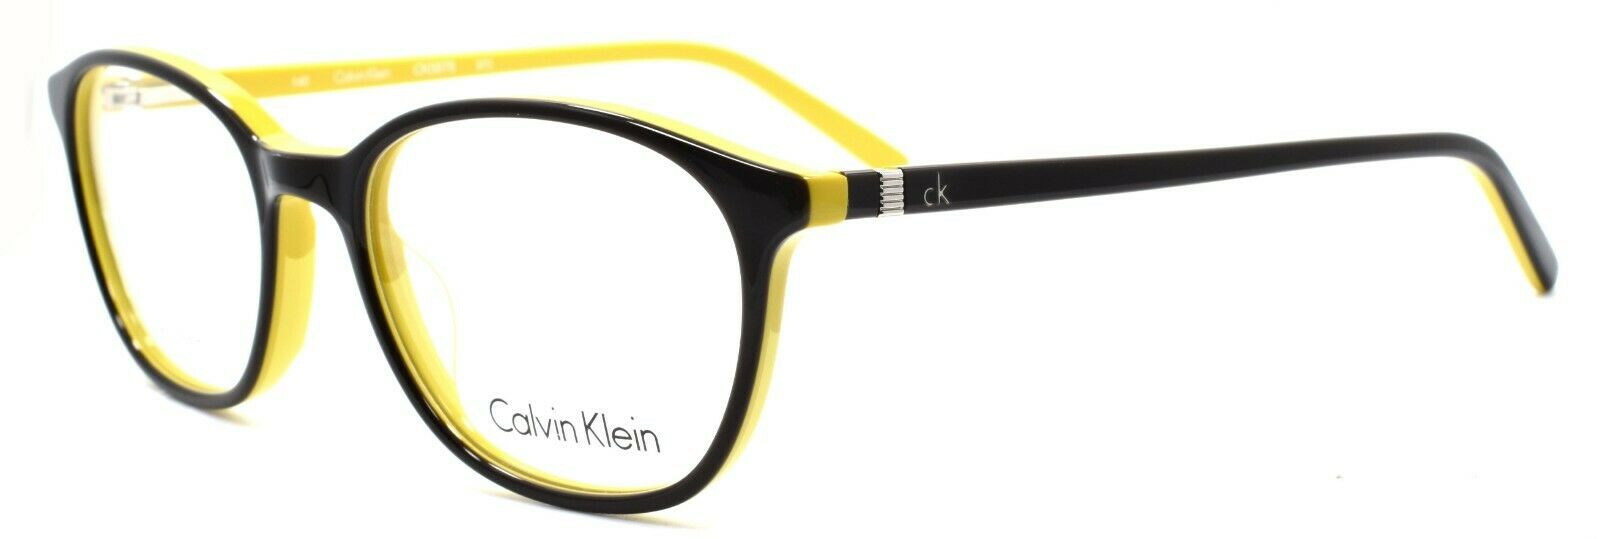 1-Calvin Klein CK5878 973 Unisex Eyeglasses Frames SMALL 49-18-140 Black / Yellow-750779078235-IKSpecs